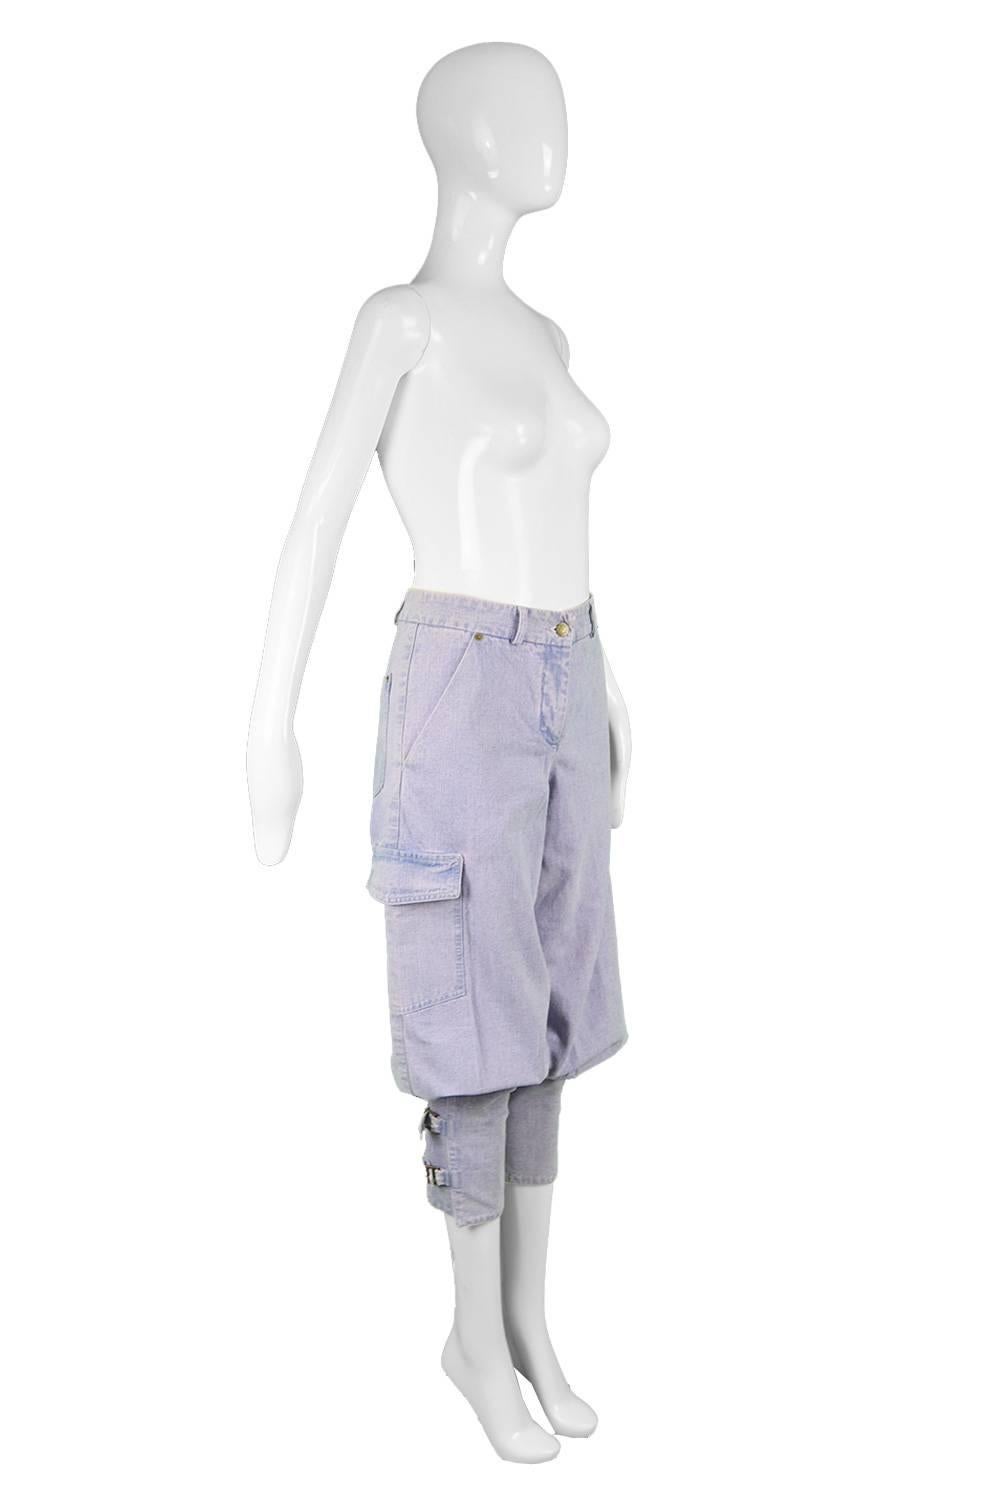 Chloé by Phoebe Philo Blue Pastel Pink Overdyed Denim Jeans / Shorts, S / S 2002 2